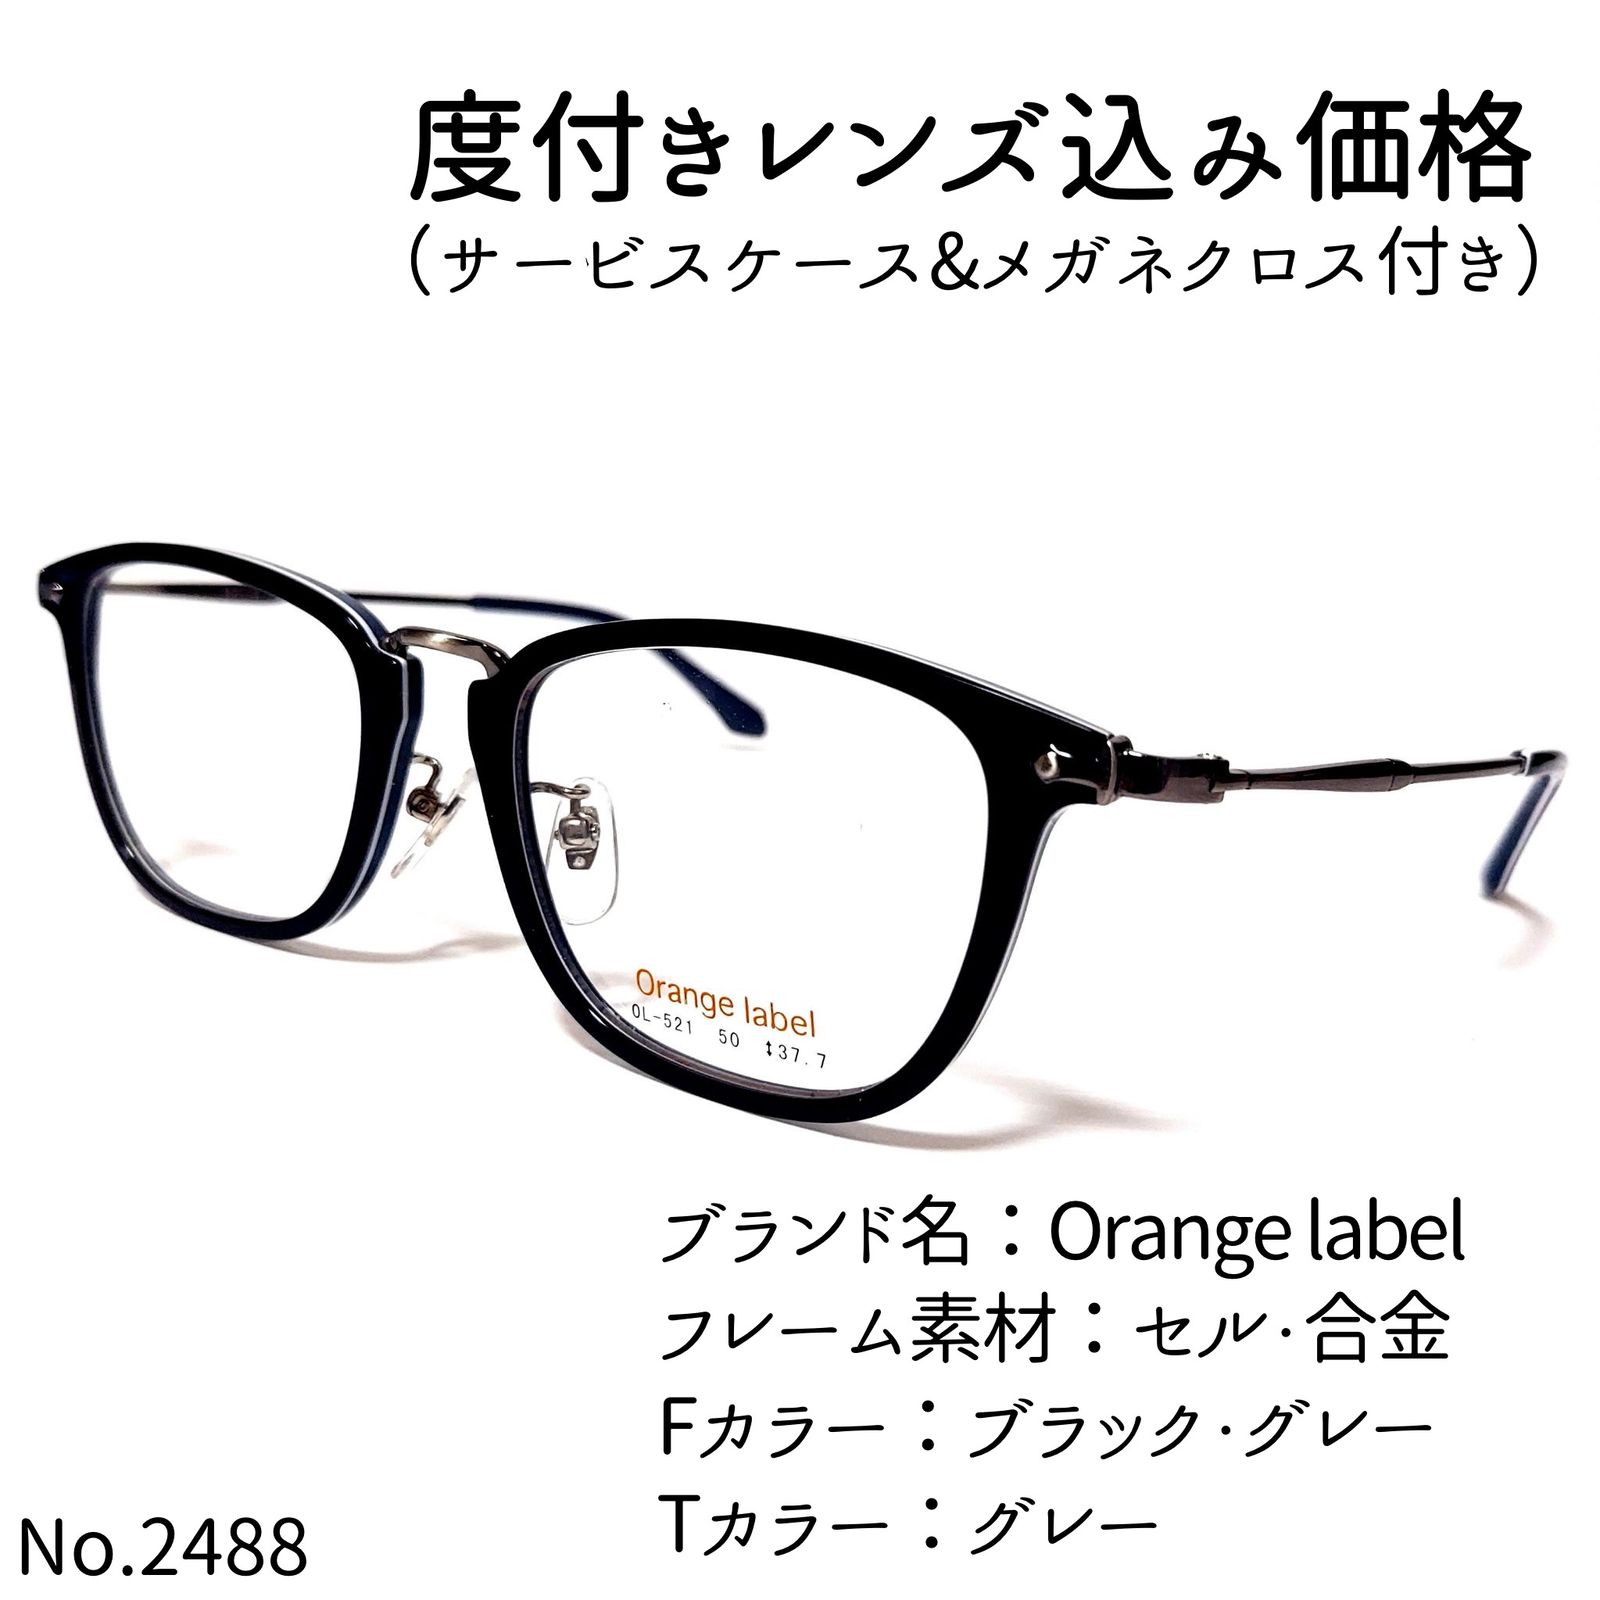 No.2488メガネ Orange label【度数入り込み価格】 - スッキリ生活専門 ...